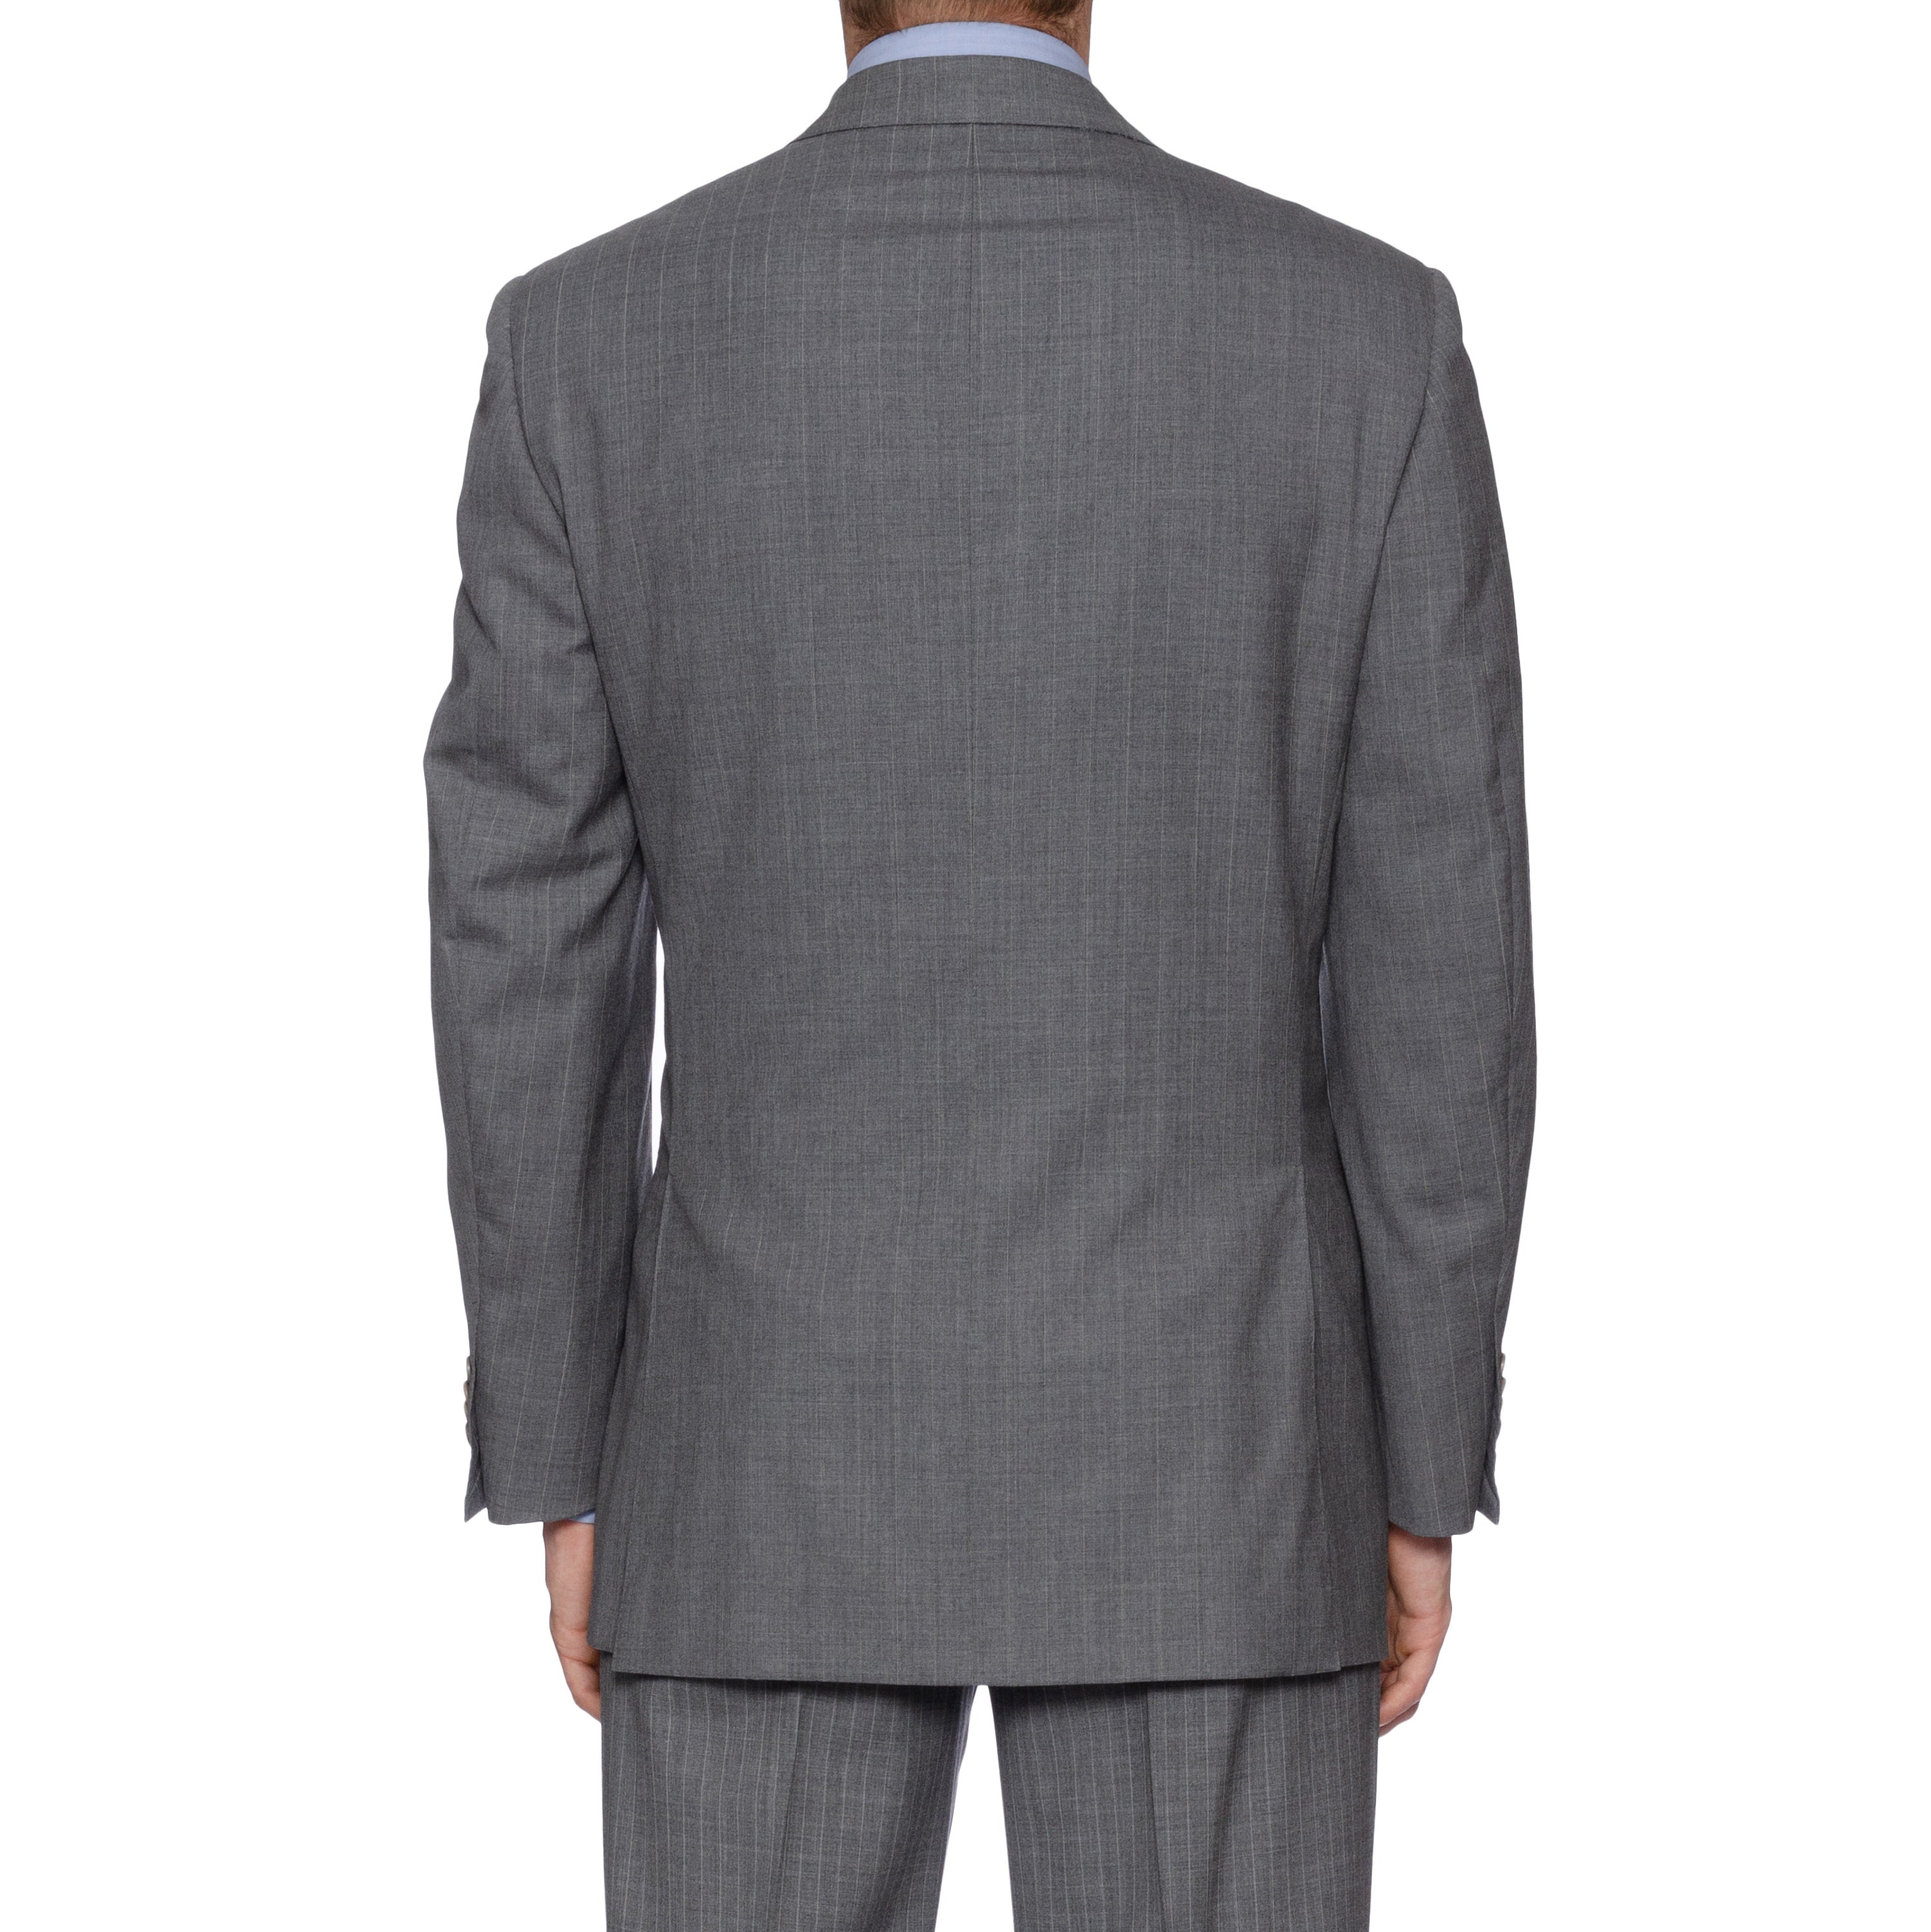 SARTORIA CASTANGIA Gray Striped Wool Super 120's Suit EU 52 NEW US 42 CASTANGIA